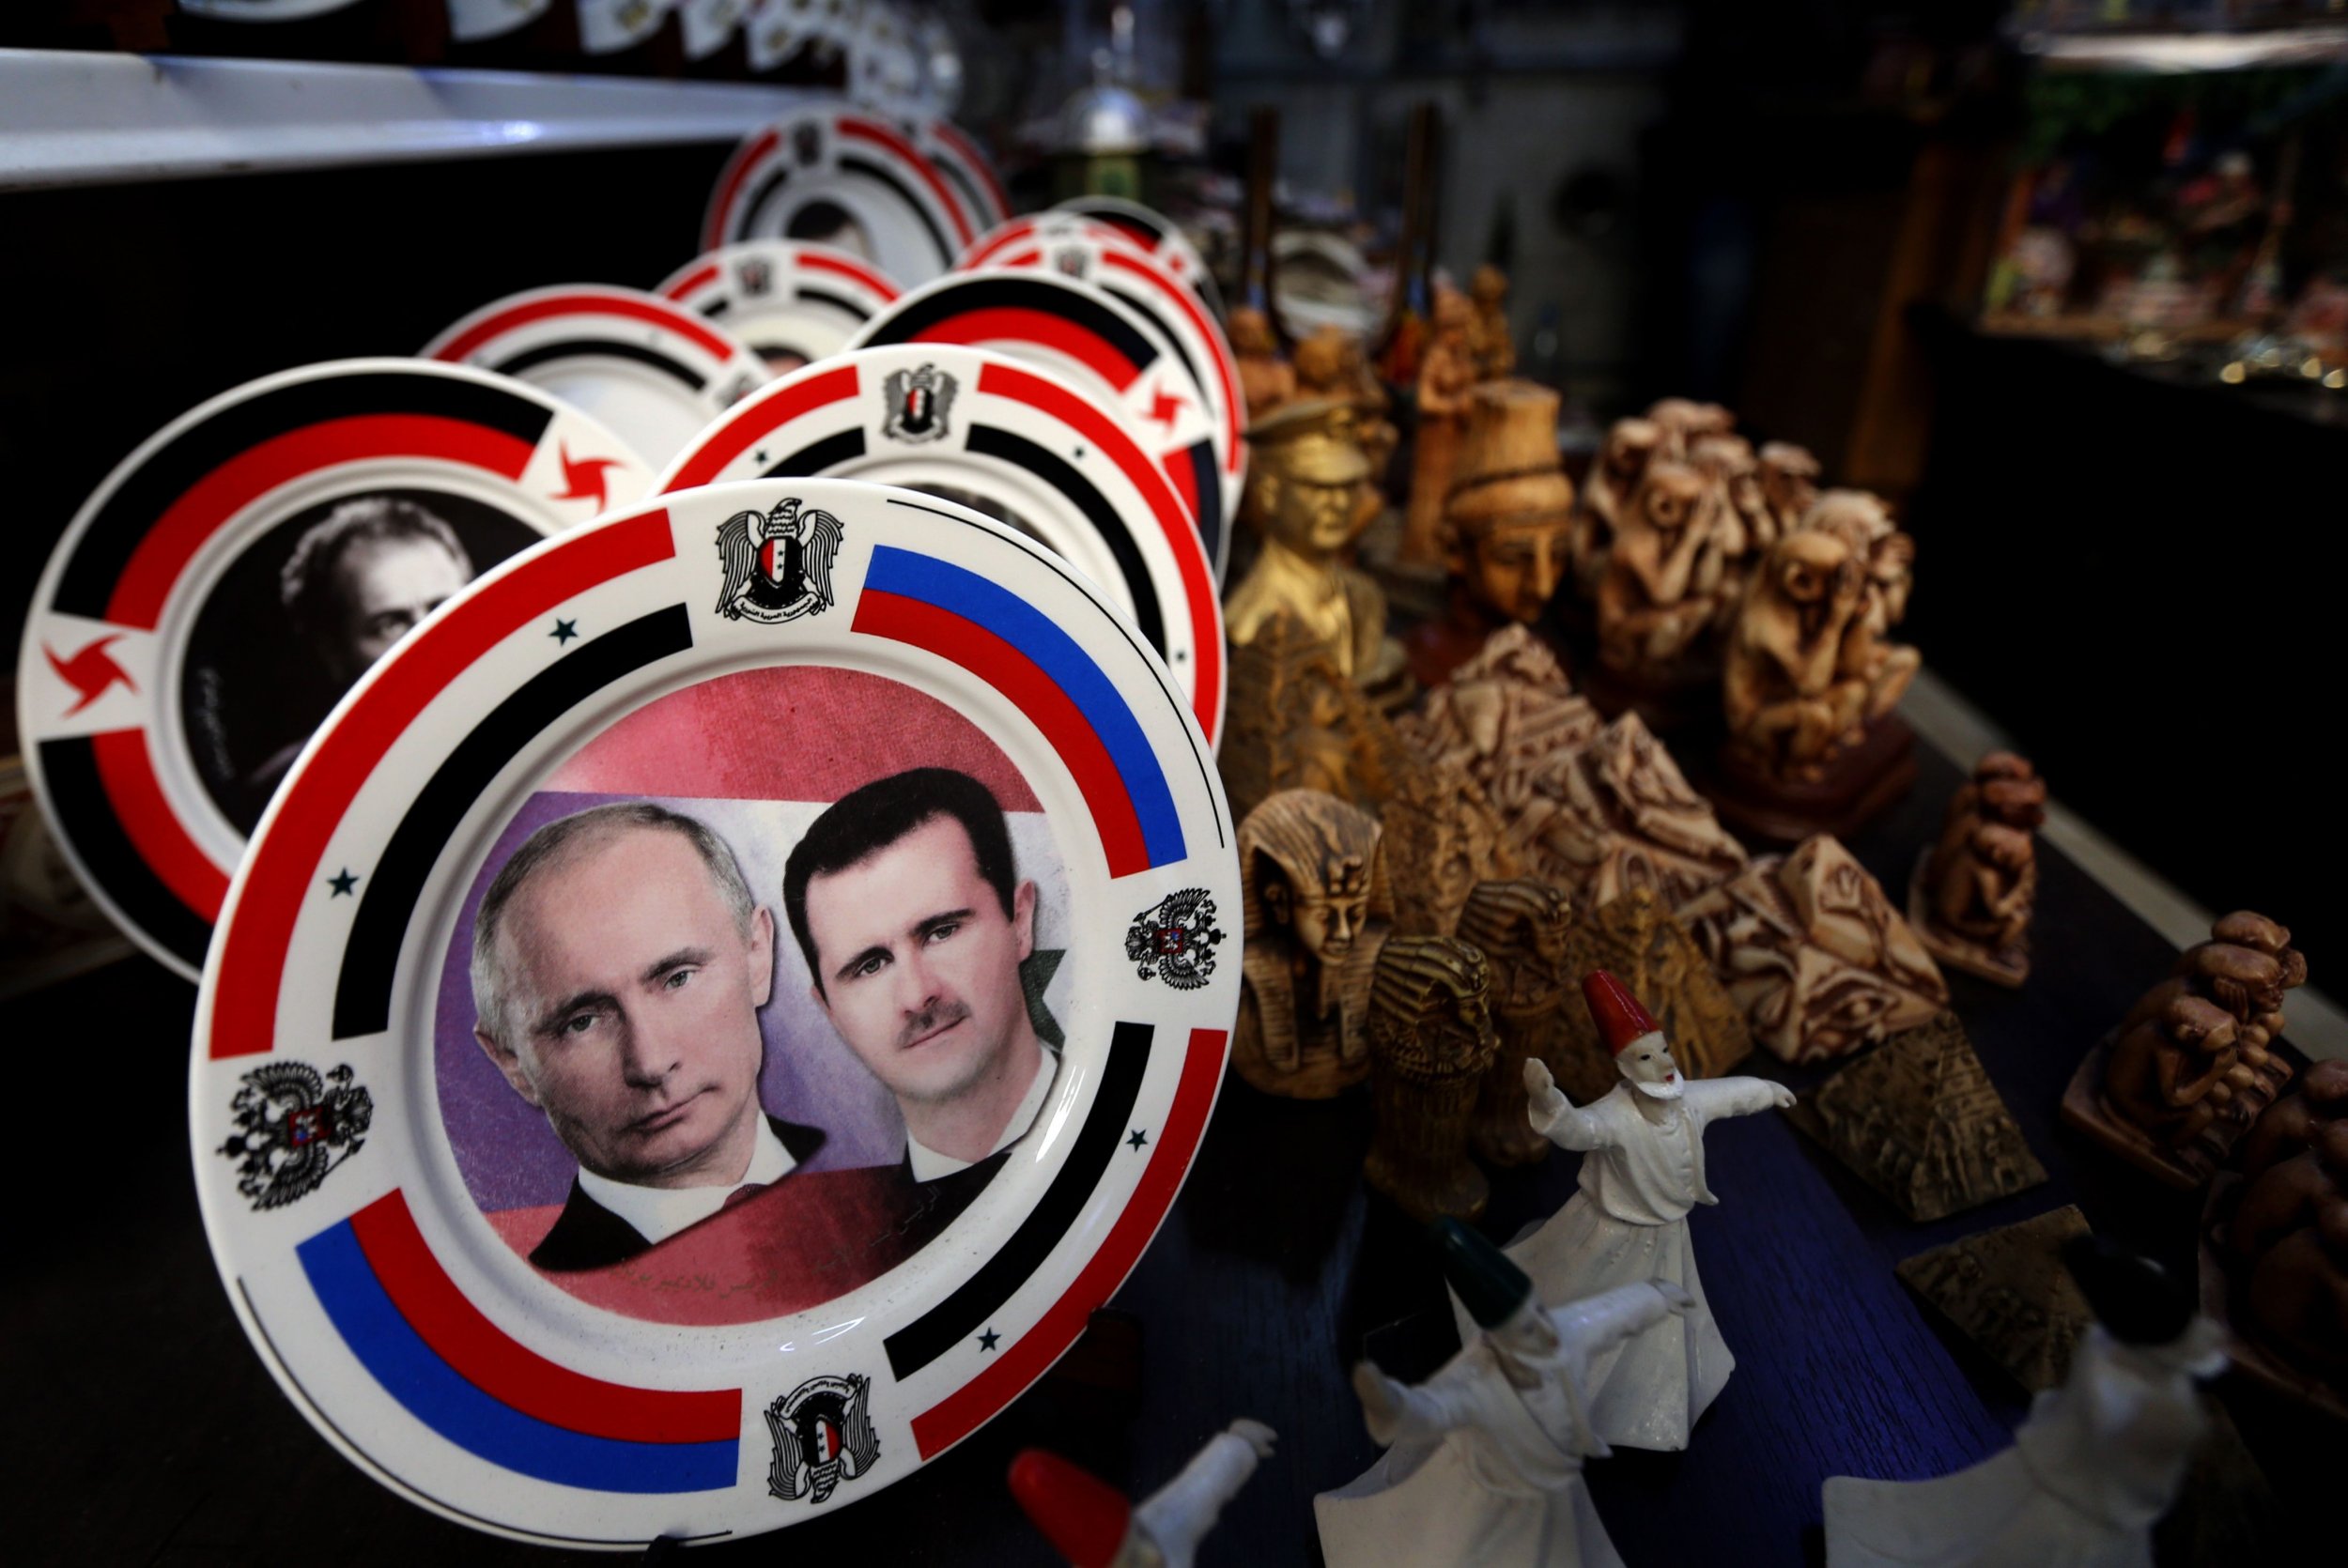 Syrian President Bashar al-Assad and Russian President Vladimir Putin